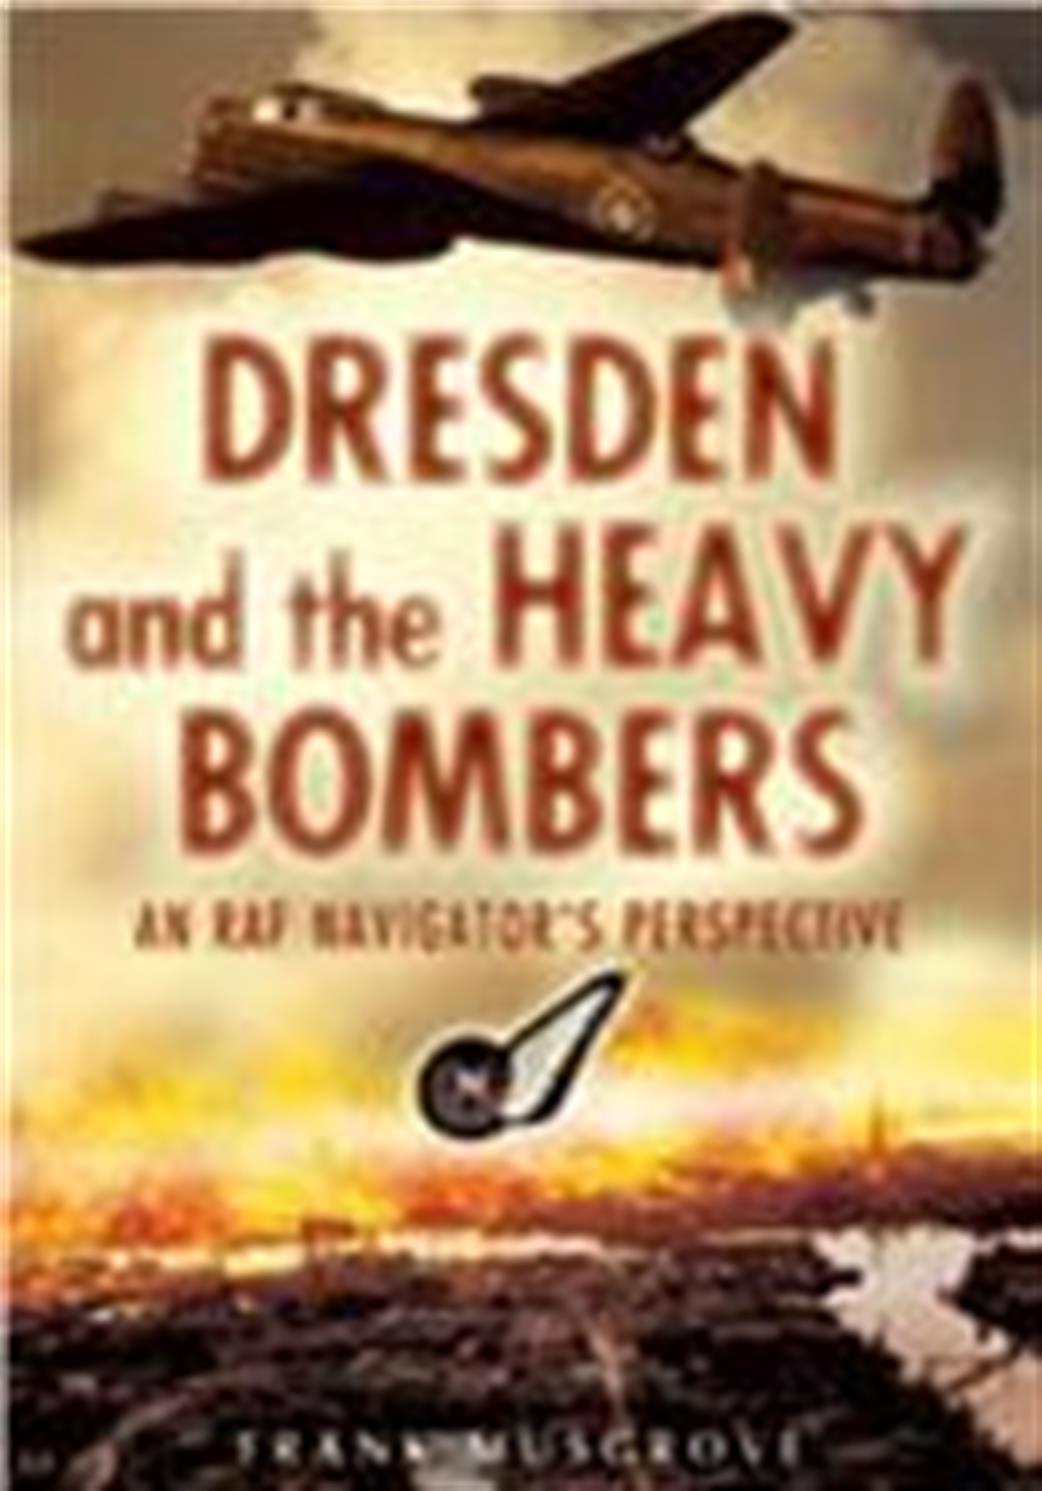 Pen & Sword  1844151948 Dresden and the Heavy Bombers An RAF Navigators Perspective